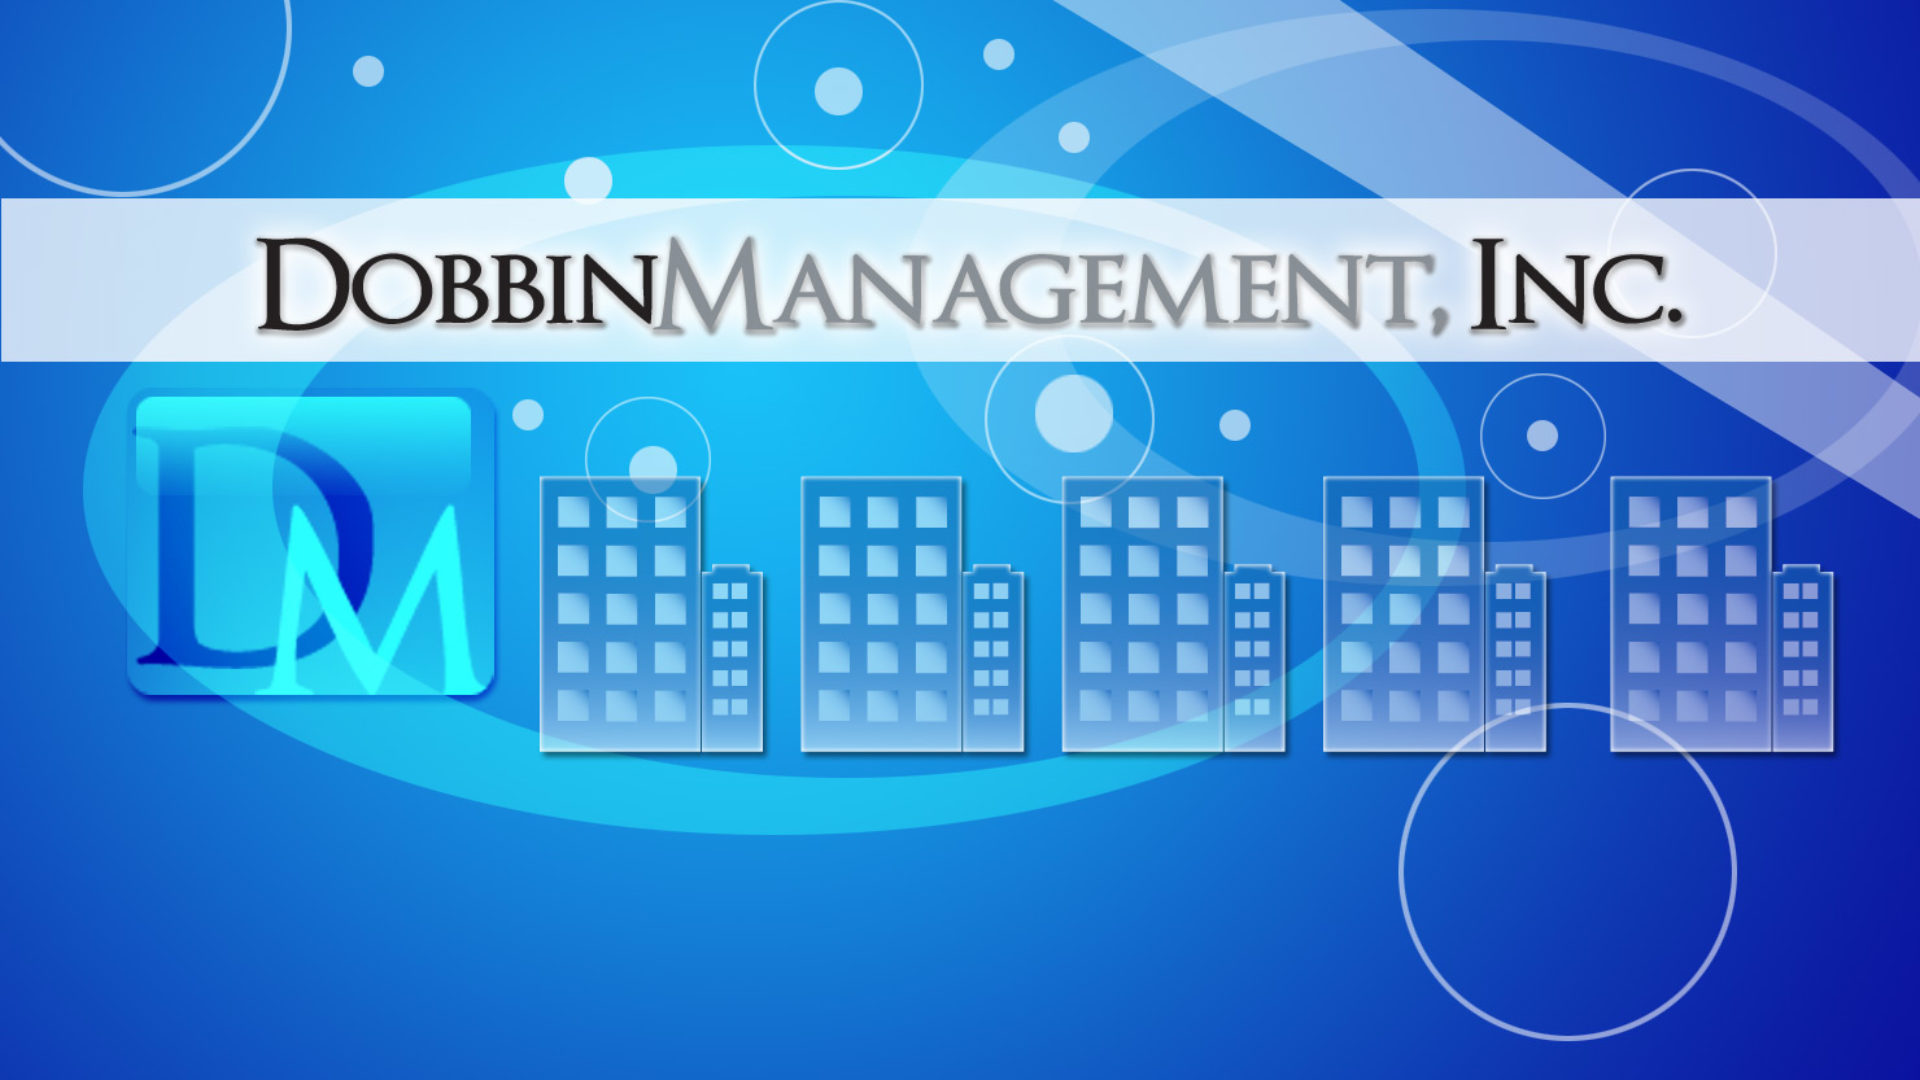 Dobbin Management, Inc.